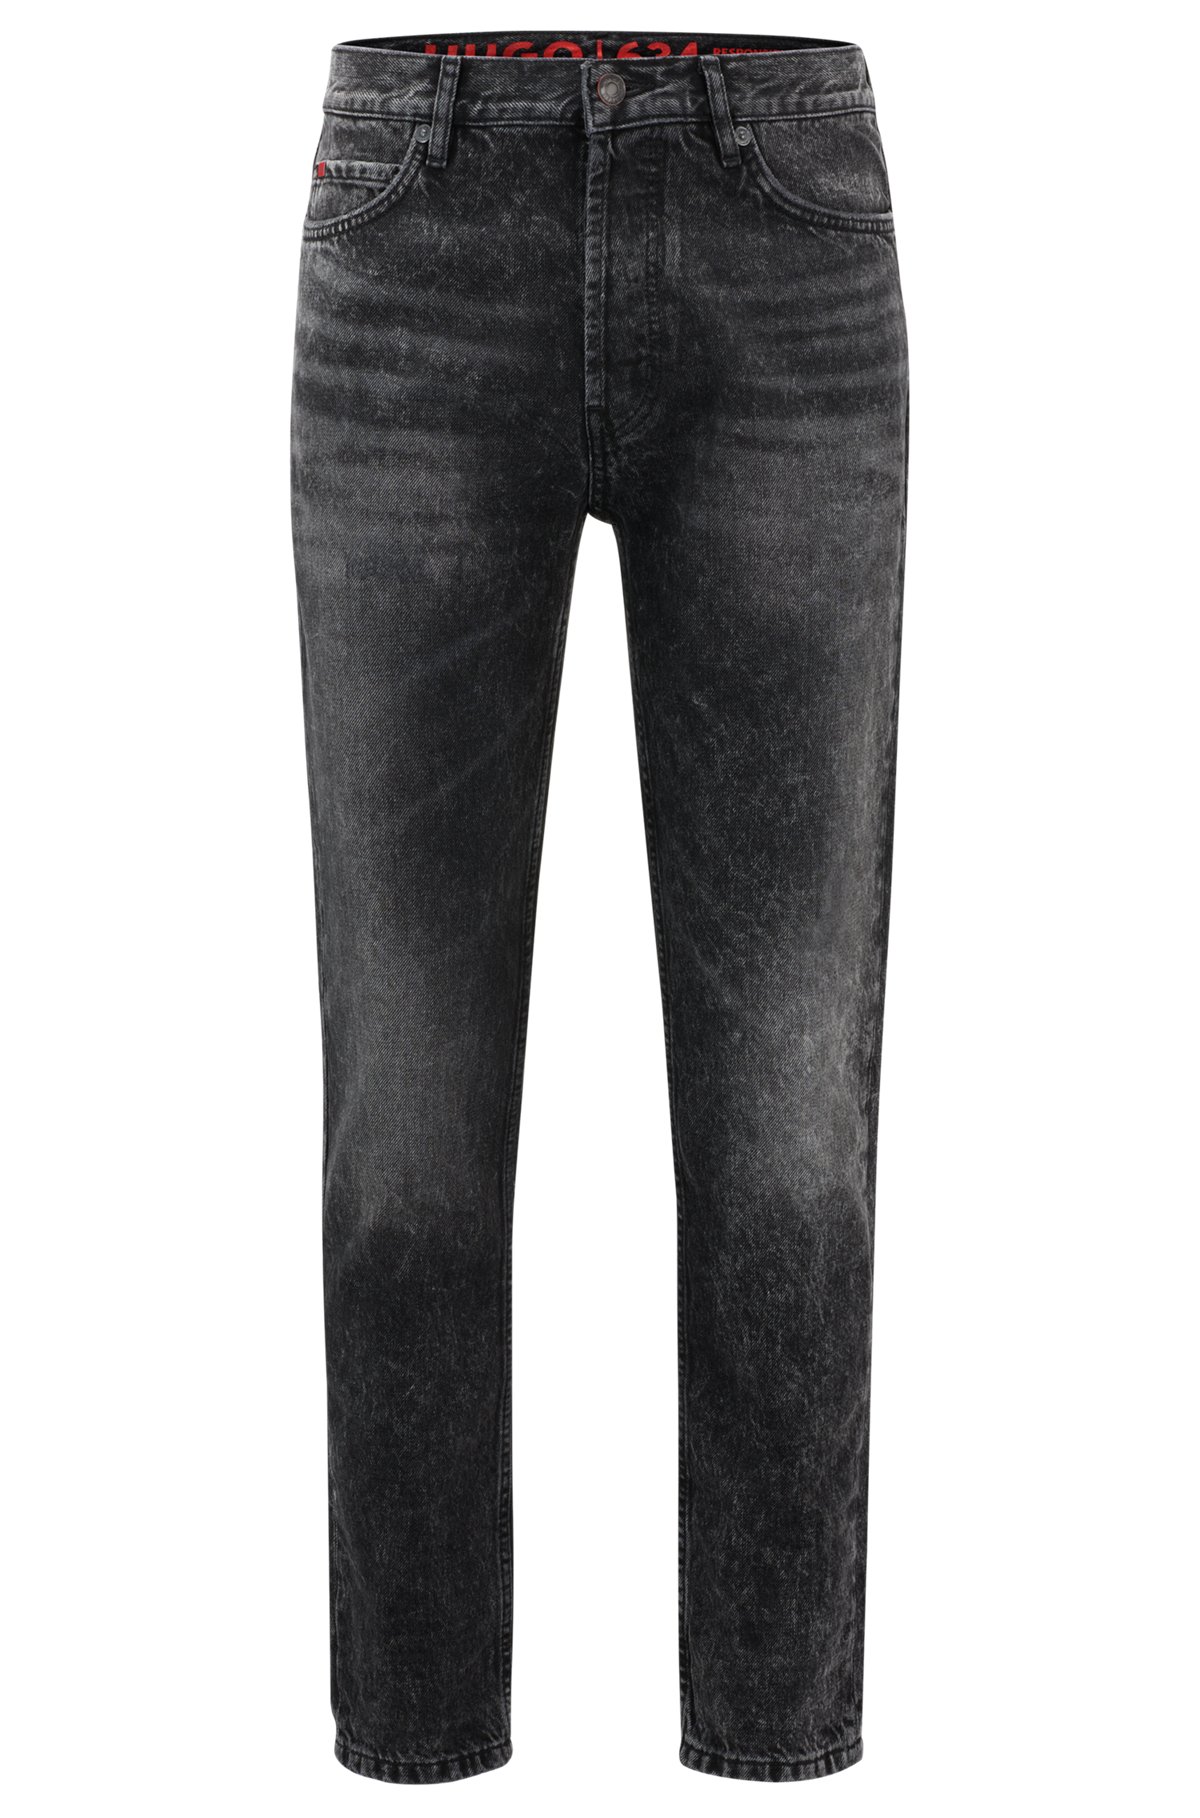 HUGO - Tapered-fit jeans in black rigid denim